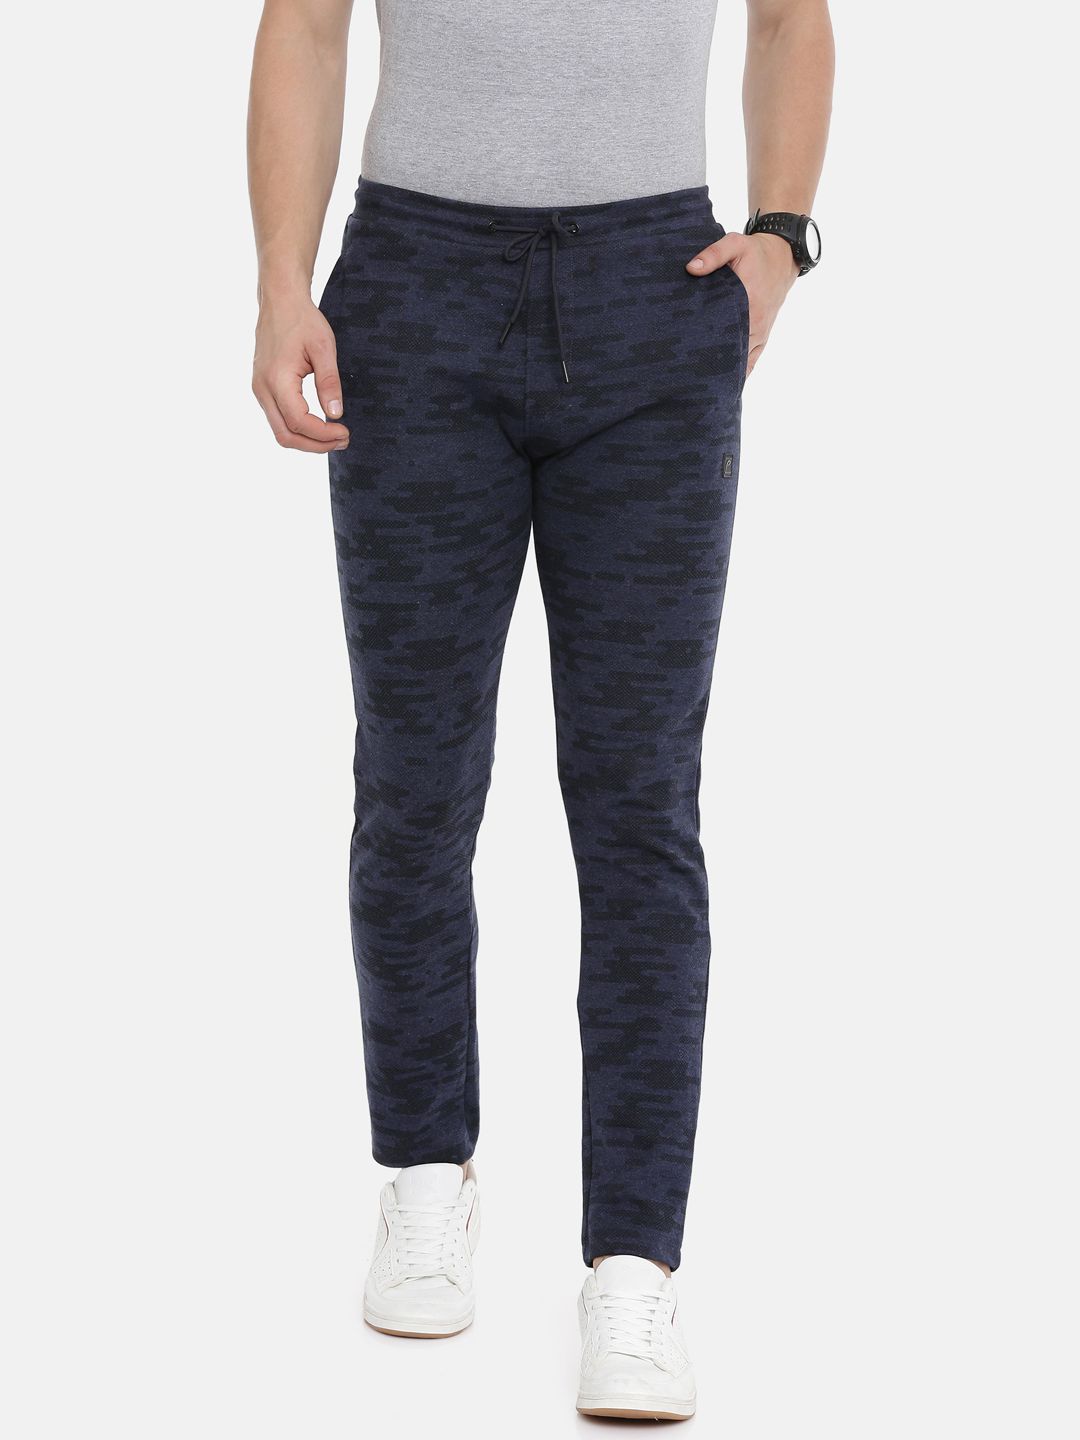 Buy PROLINE Grey Textured Cotton Regular Fit Men's Track Pants | Shoppers  Stop